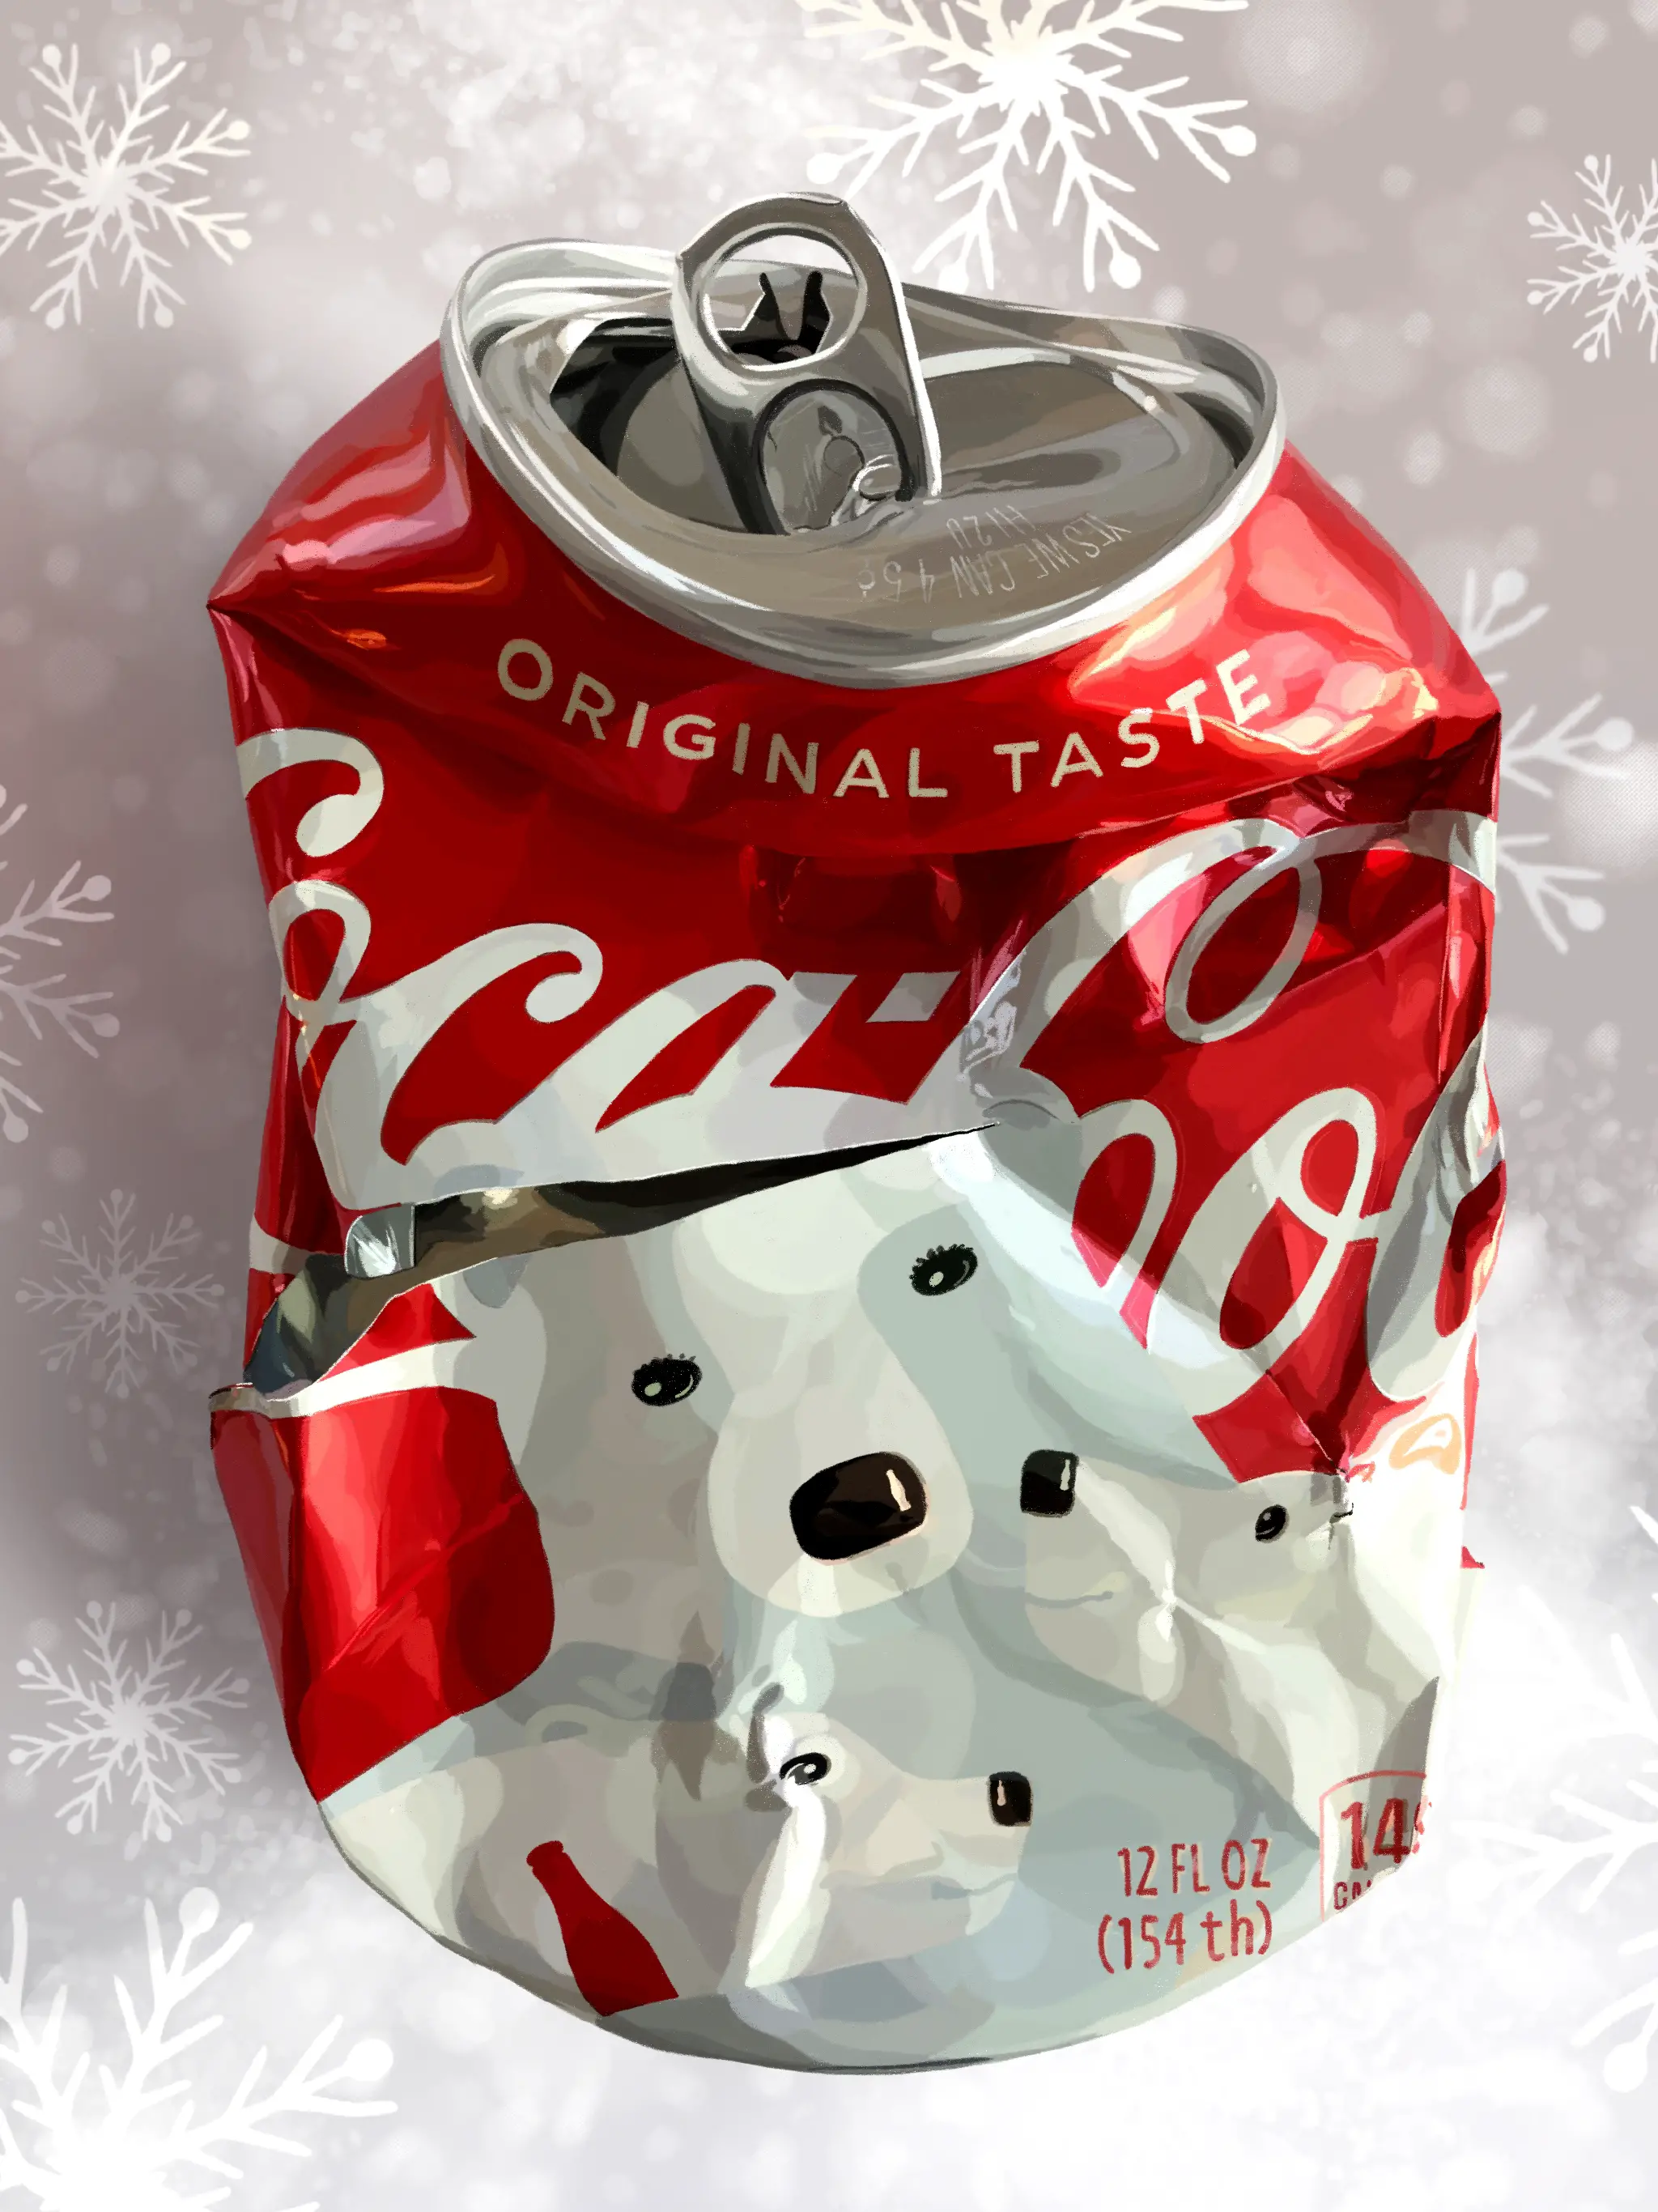 Crushed Coke can